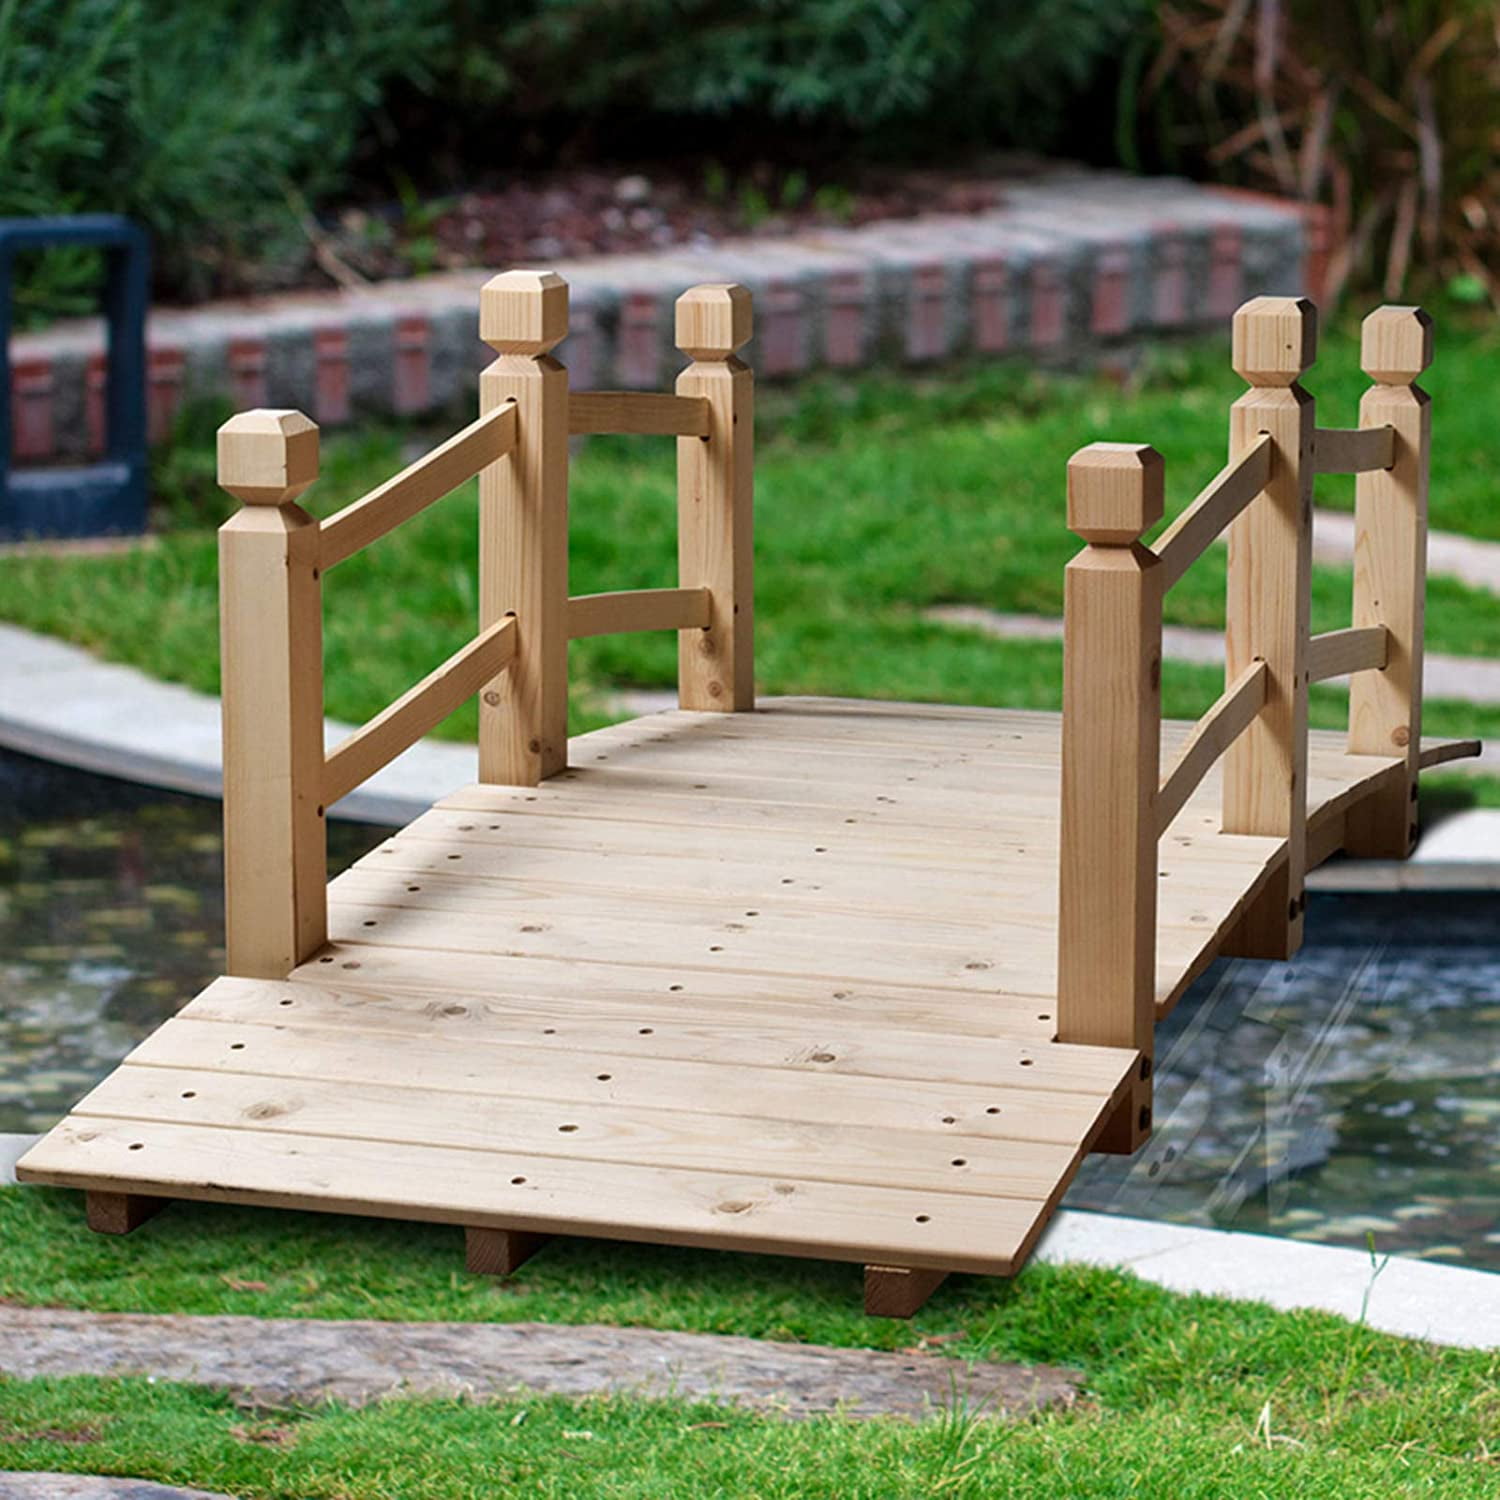 CYY Beauty Garden Bridge Wood Arc Bridge with Guardrails Decoration for Backyard and Pond wood1 